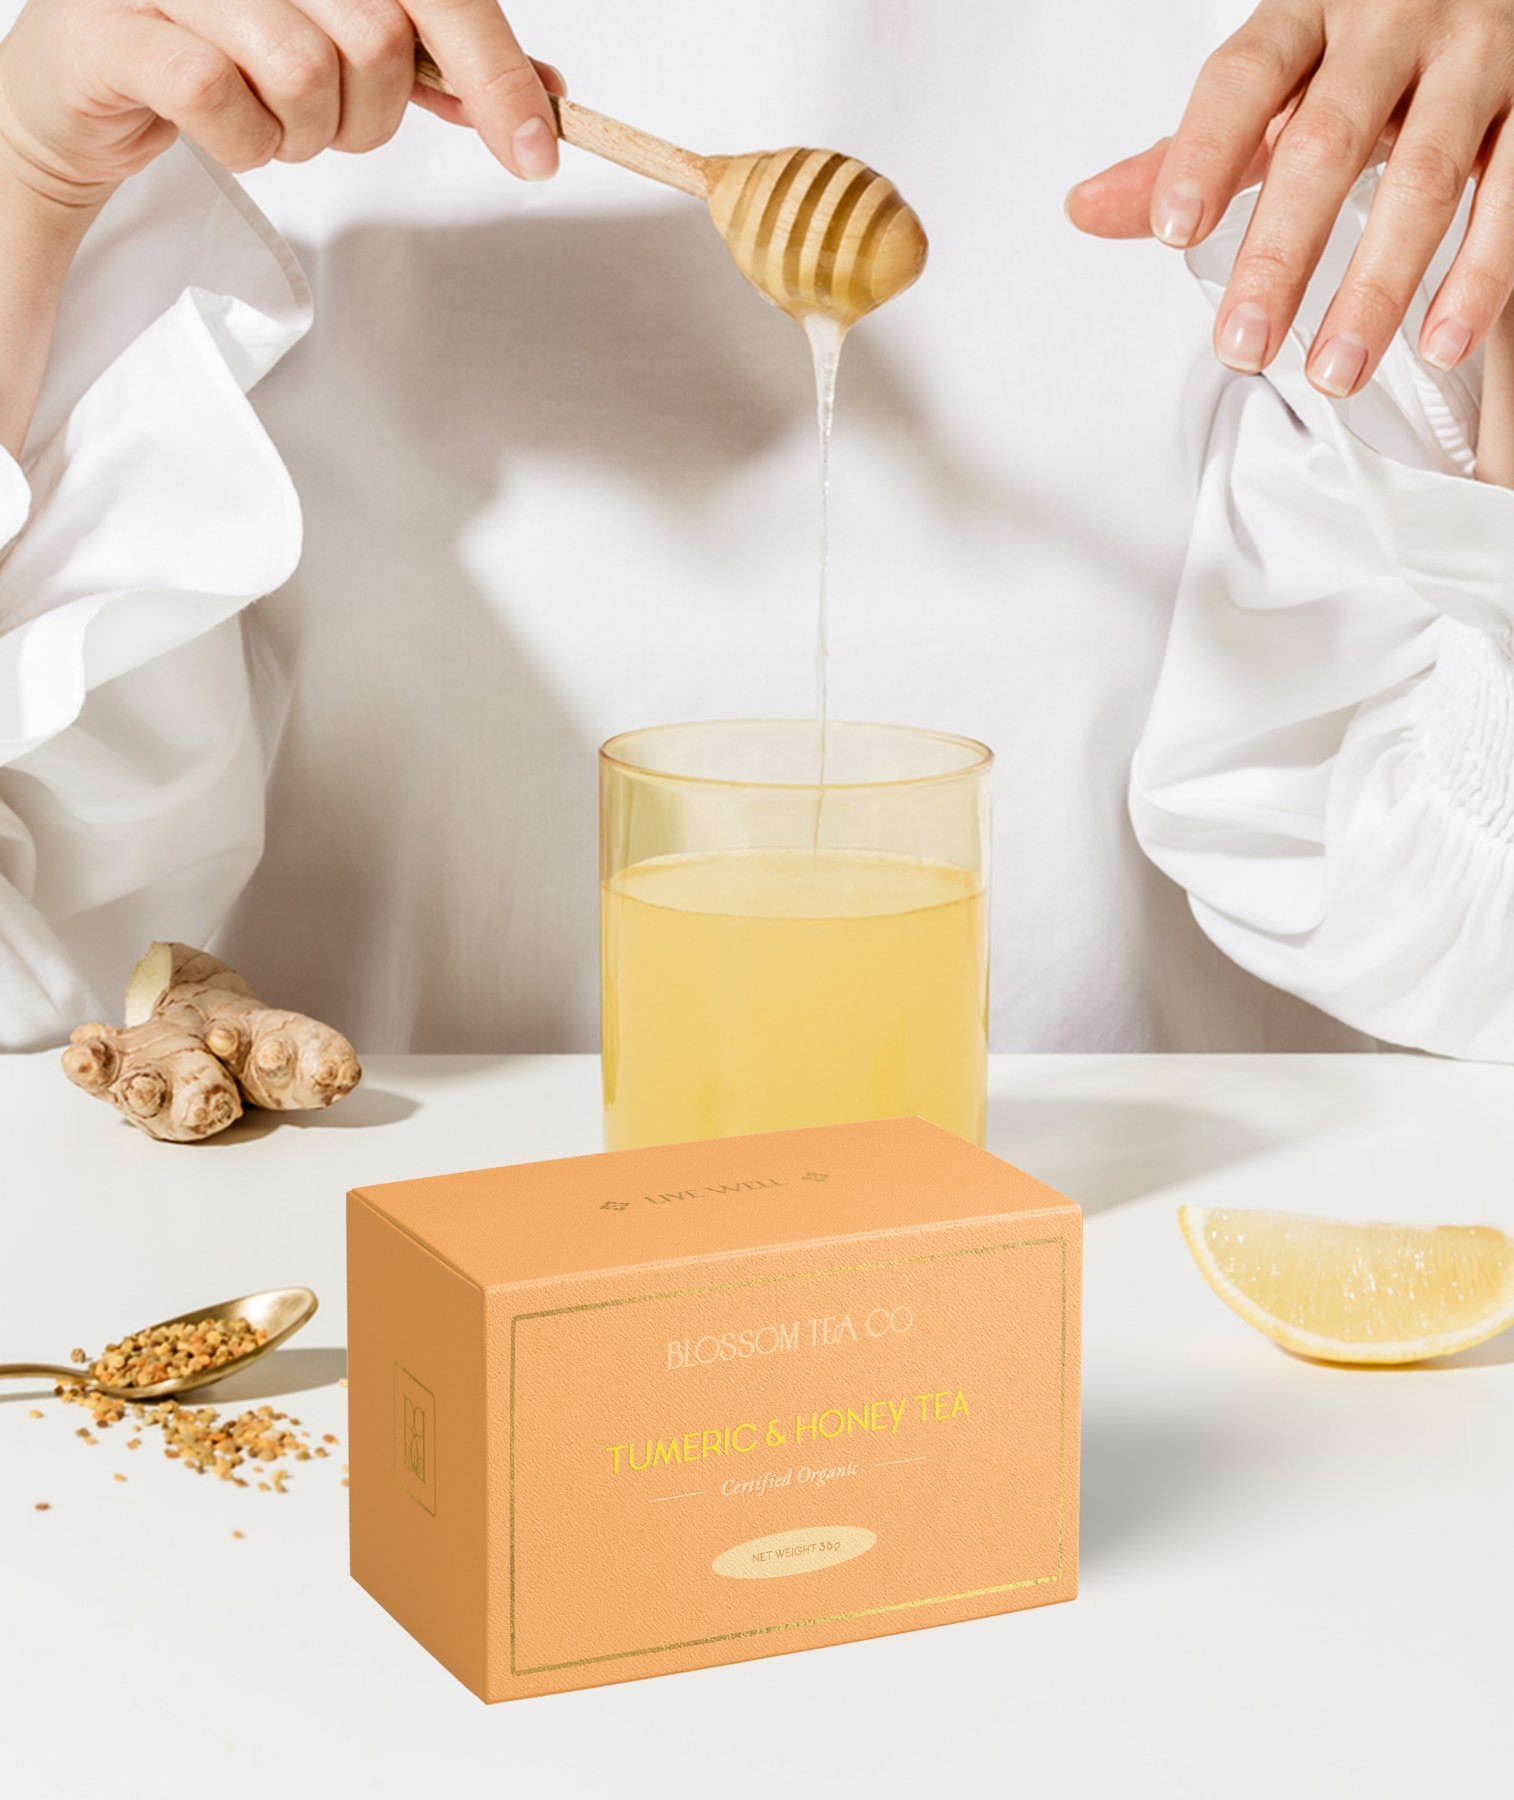 Blossom tea brand_packaging_by Kyomi Design Agency.jpg